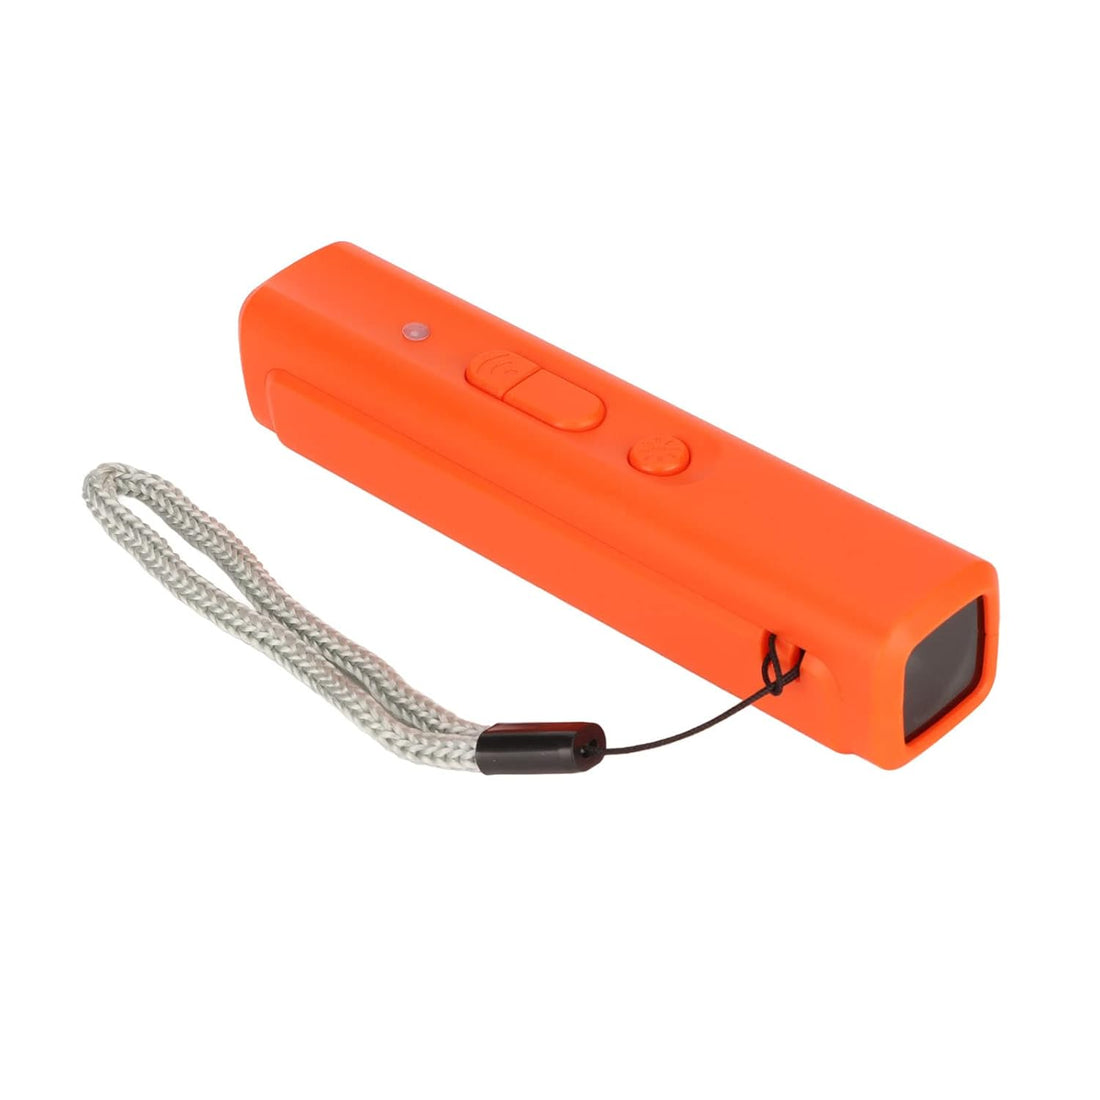 Hztyyier Dog Bark Deterrent Devices, Portable Safe Ultrasonic Dog Barking Control Devices Handheld 365NM Violet Light Beads with UV Violet Light Lanyard for Outdoor (Orange)